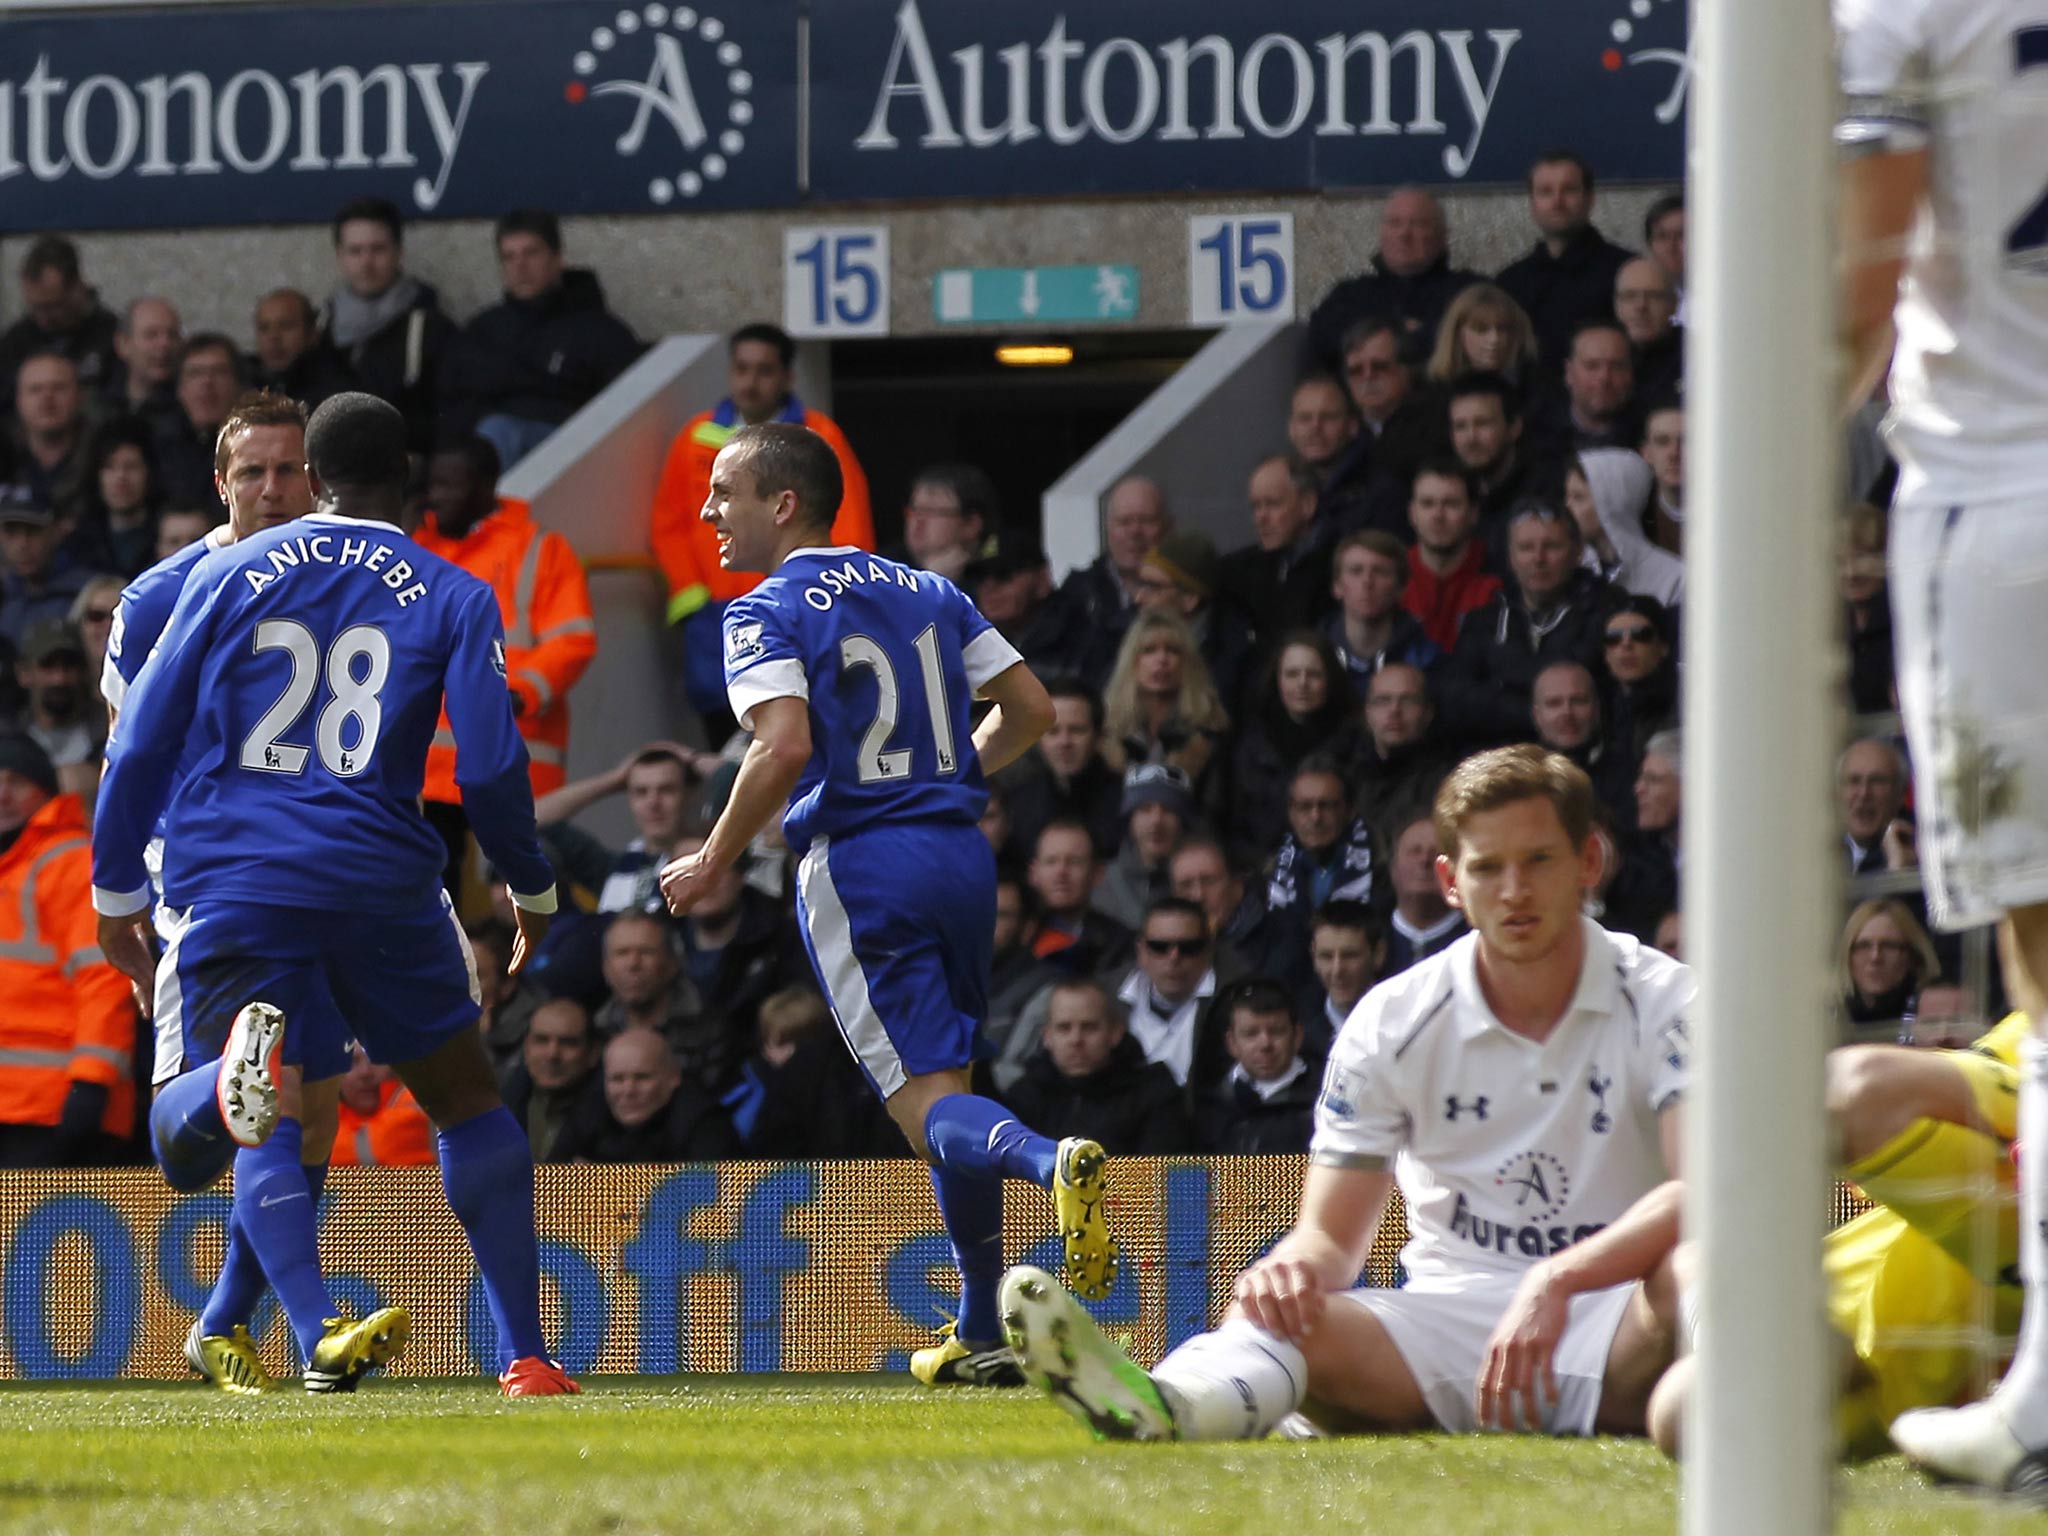 Phil Jagielka of Everton celebrates after scoring against Tottenham